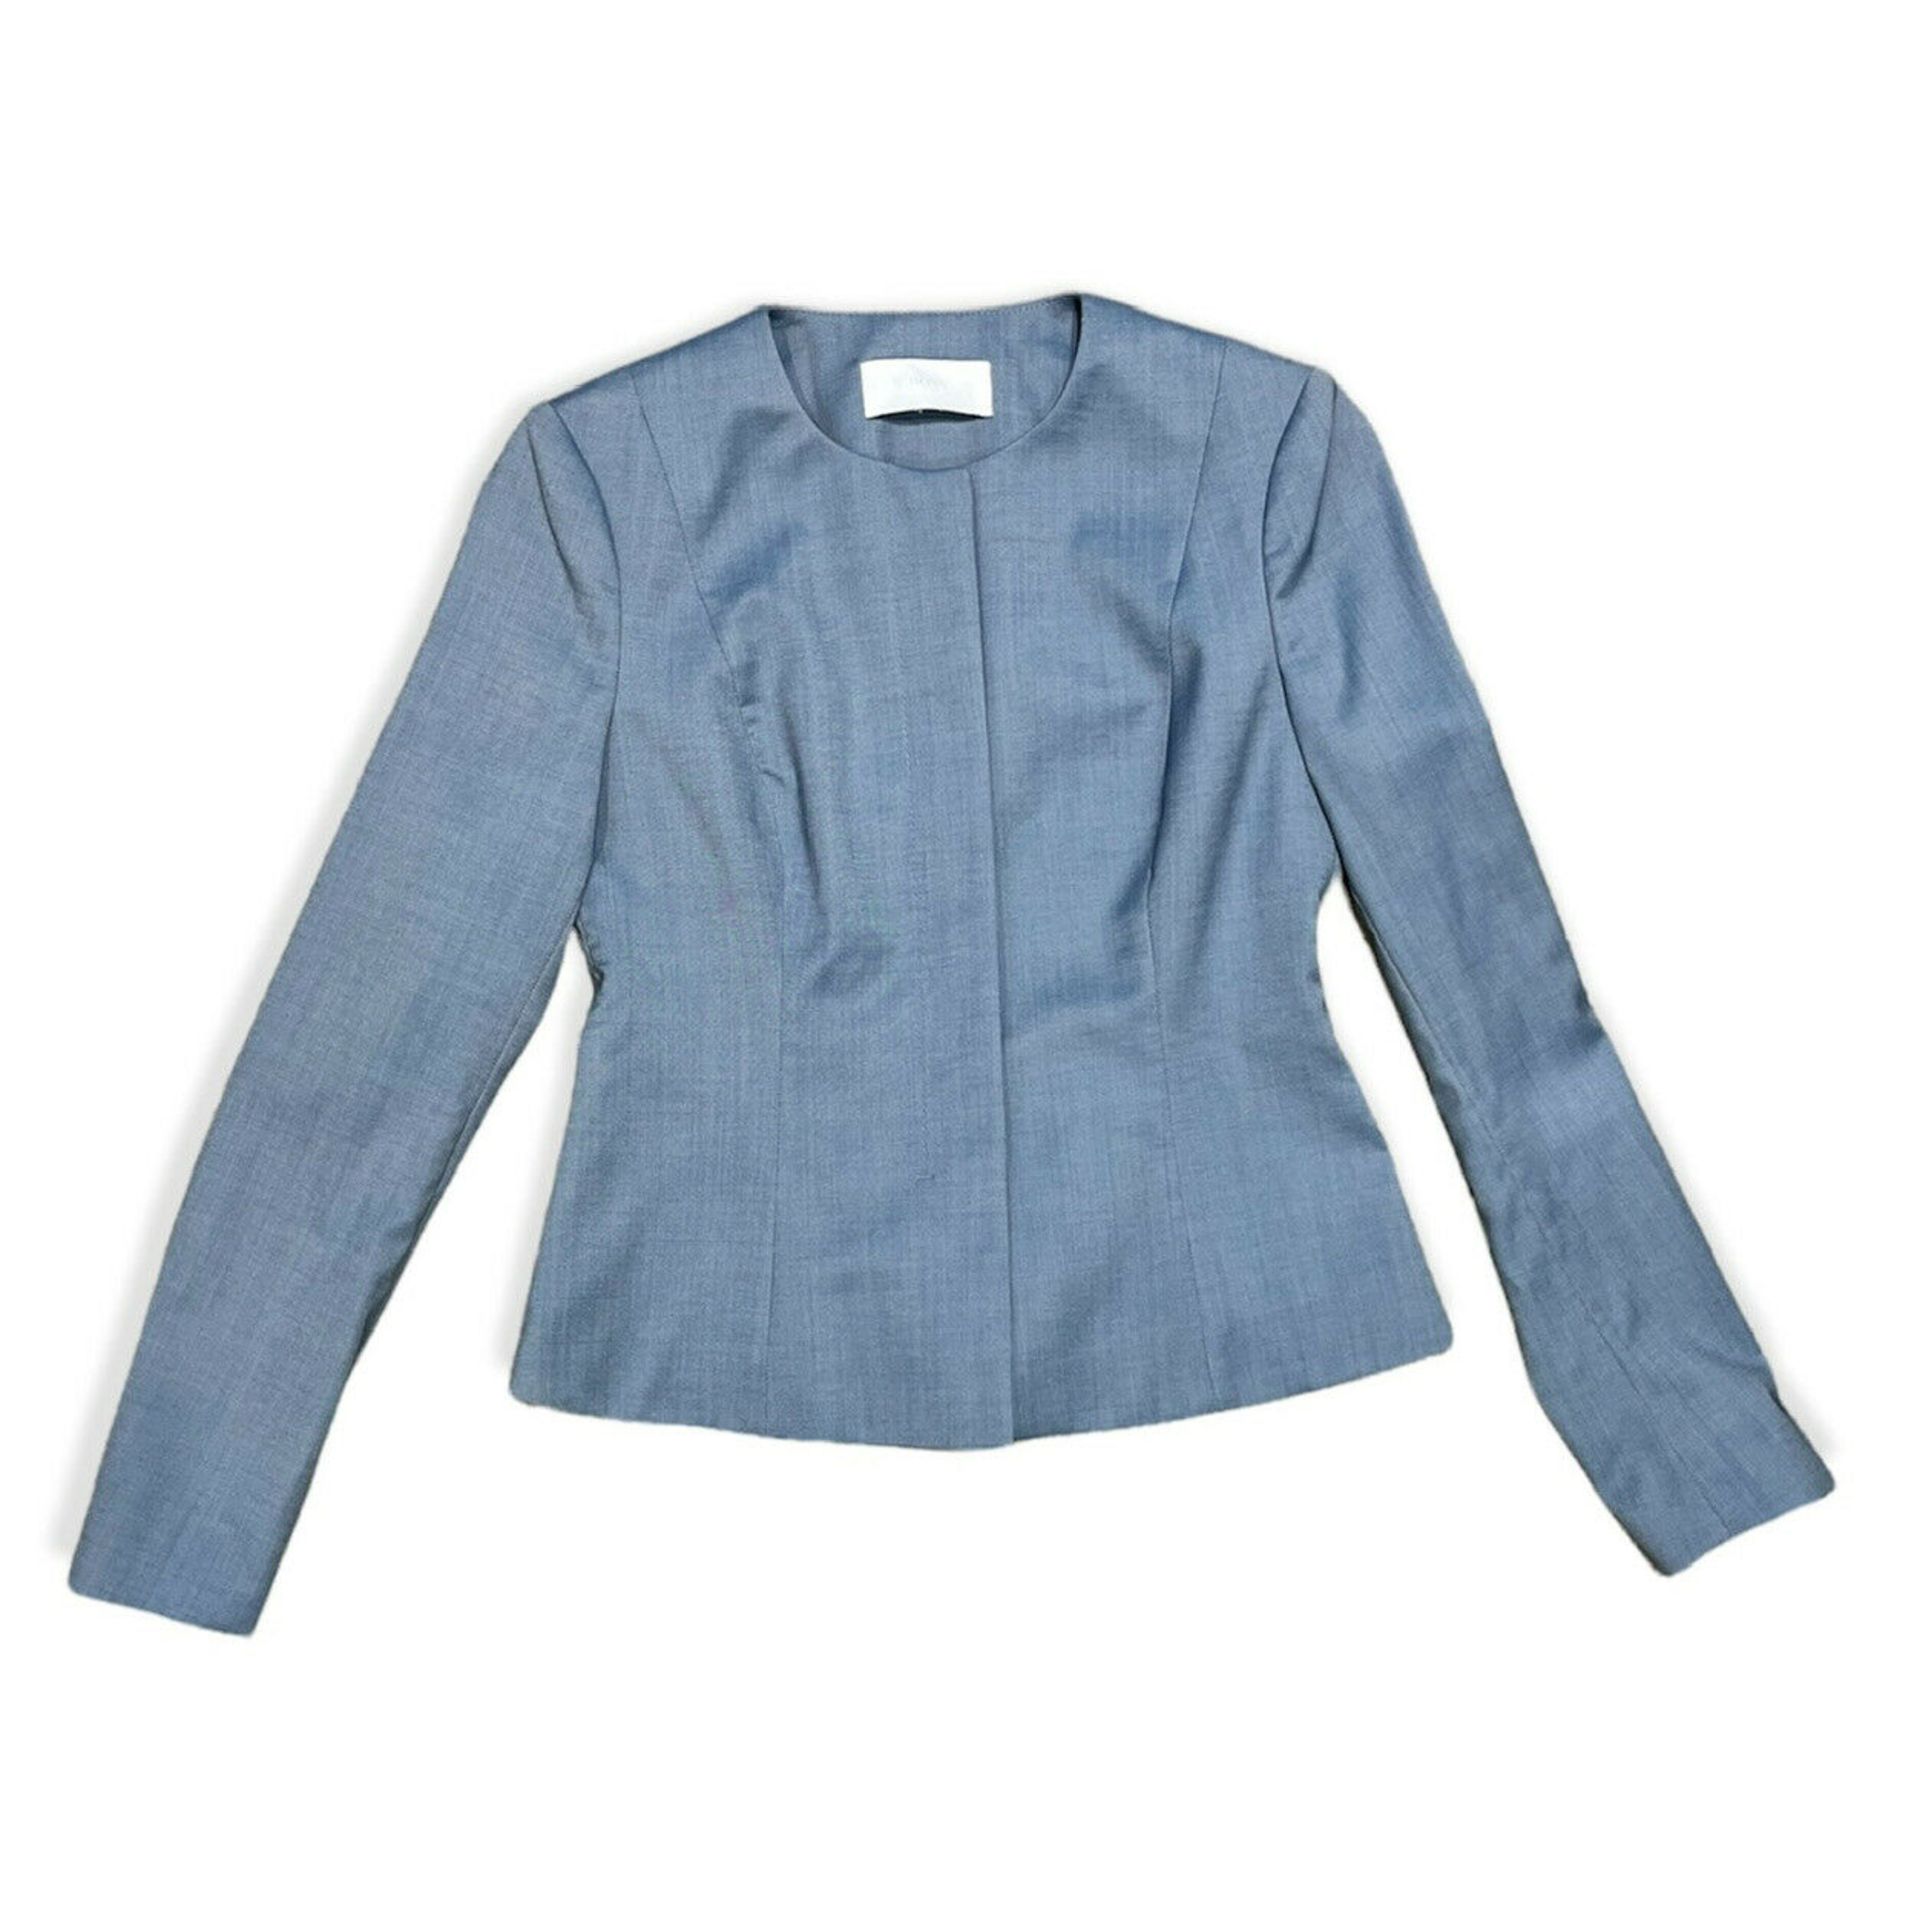 Hugo boss ladies blue blazer size 8 RRP £320